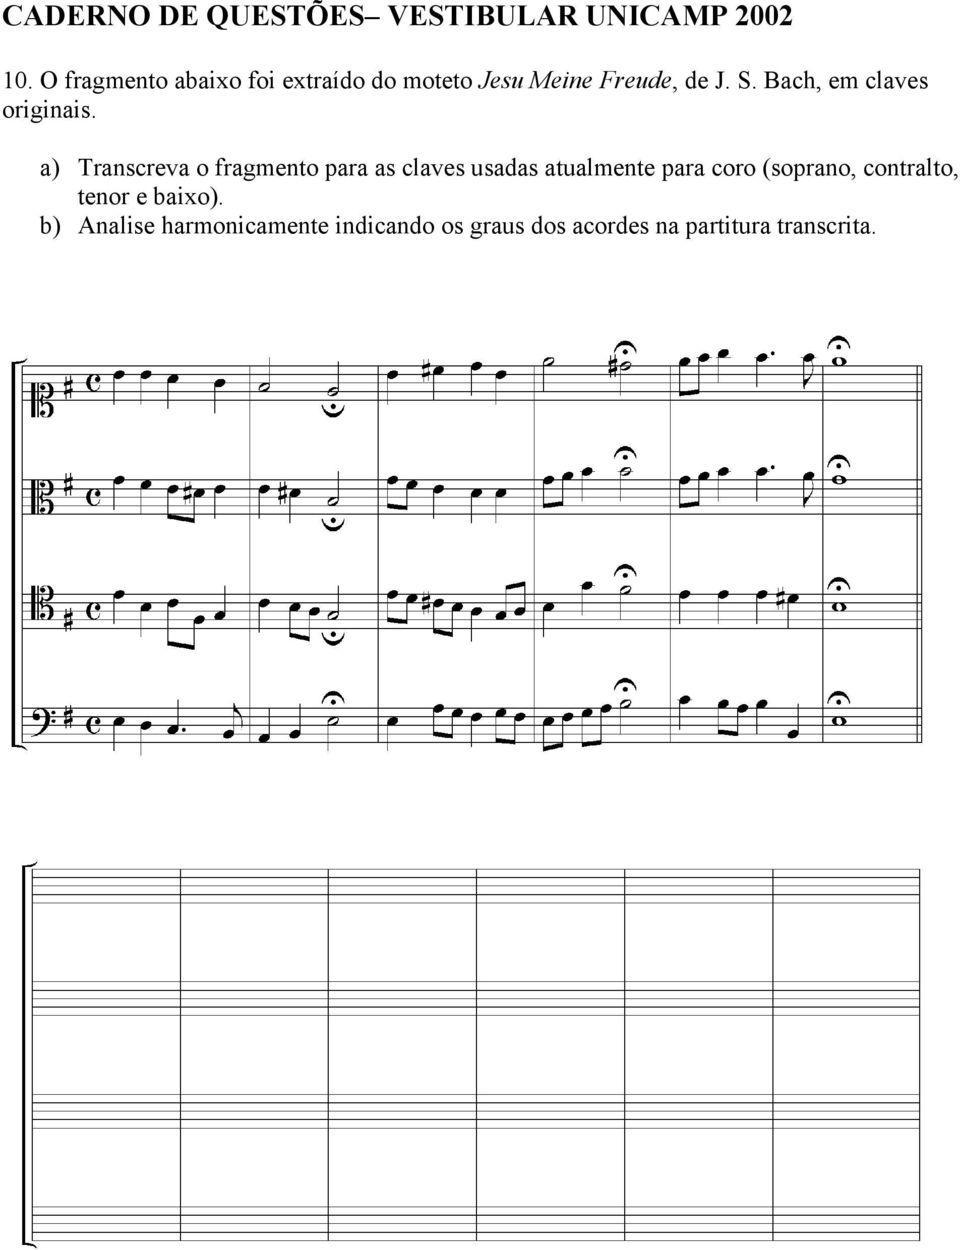 a) Transcreva o fragmento para as claves usadas atualmente para coro